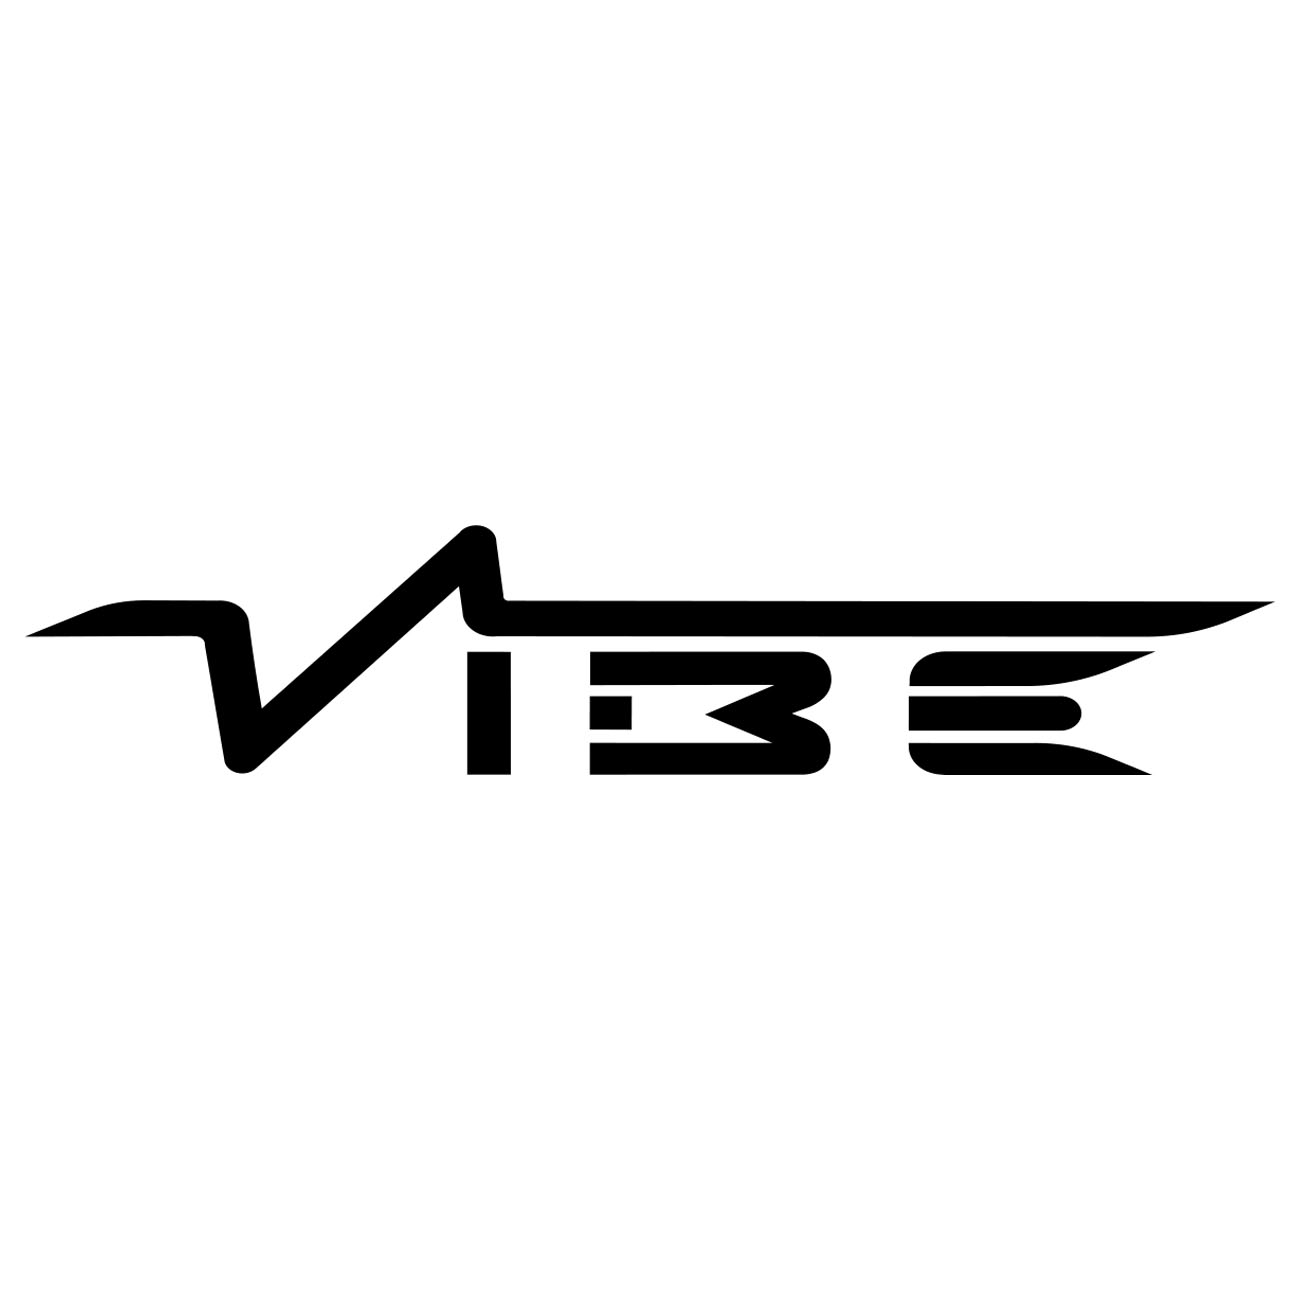 Vibe ru. Vibe логотип. Бренды динамиков. Vibe car Audio. Vibe автозвук логотип вектор.